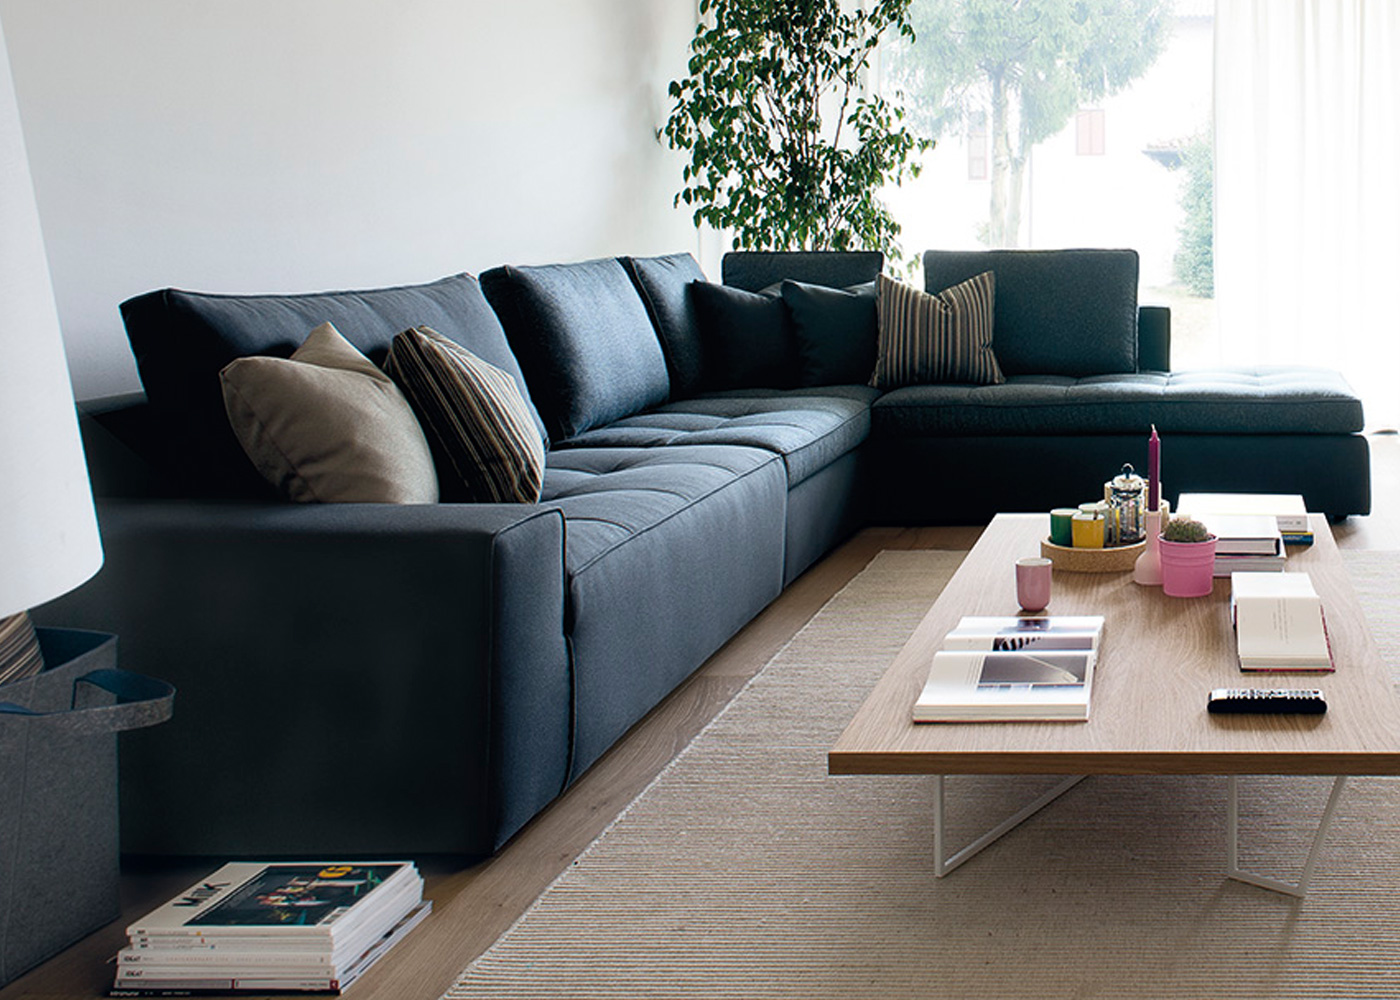 Calligaris Lounge Sofa - Midfurn Furniture Superstore